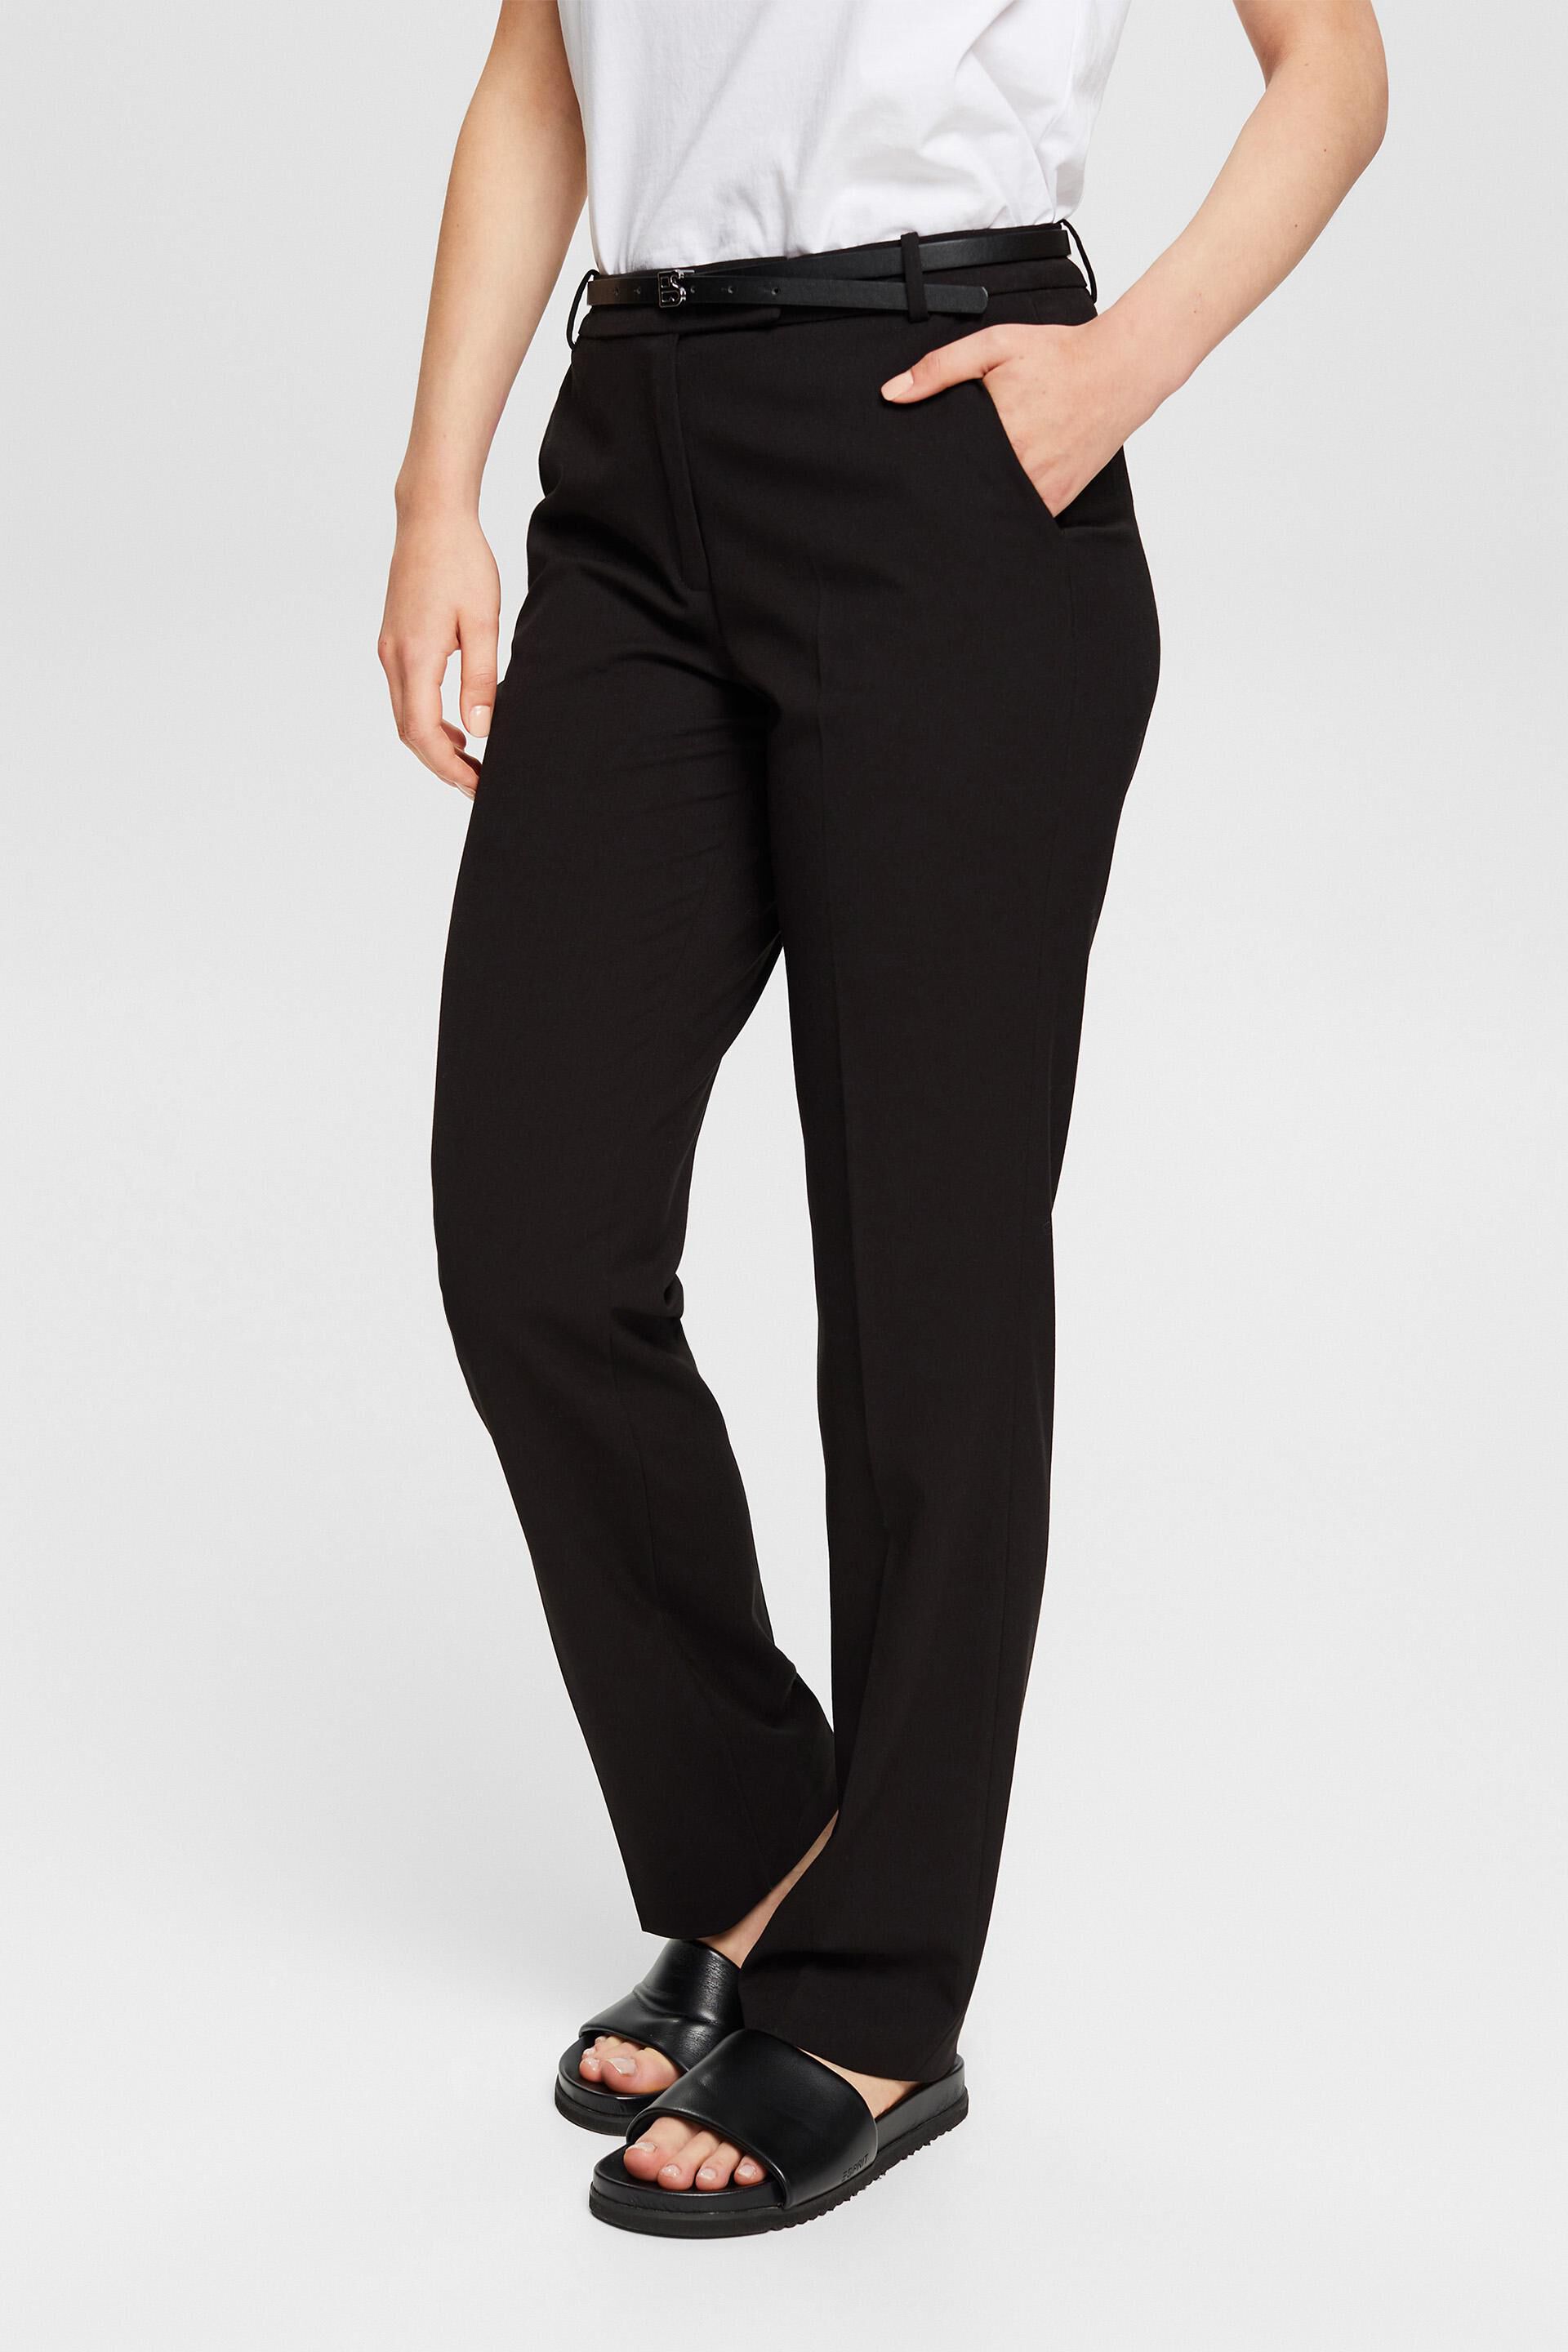 Esprit & BUSINESS PURE trousers mix match